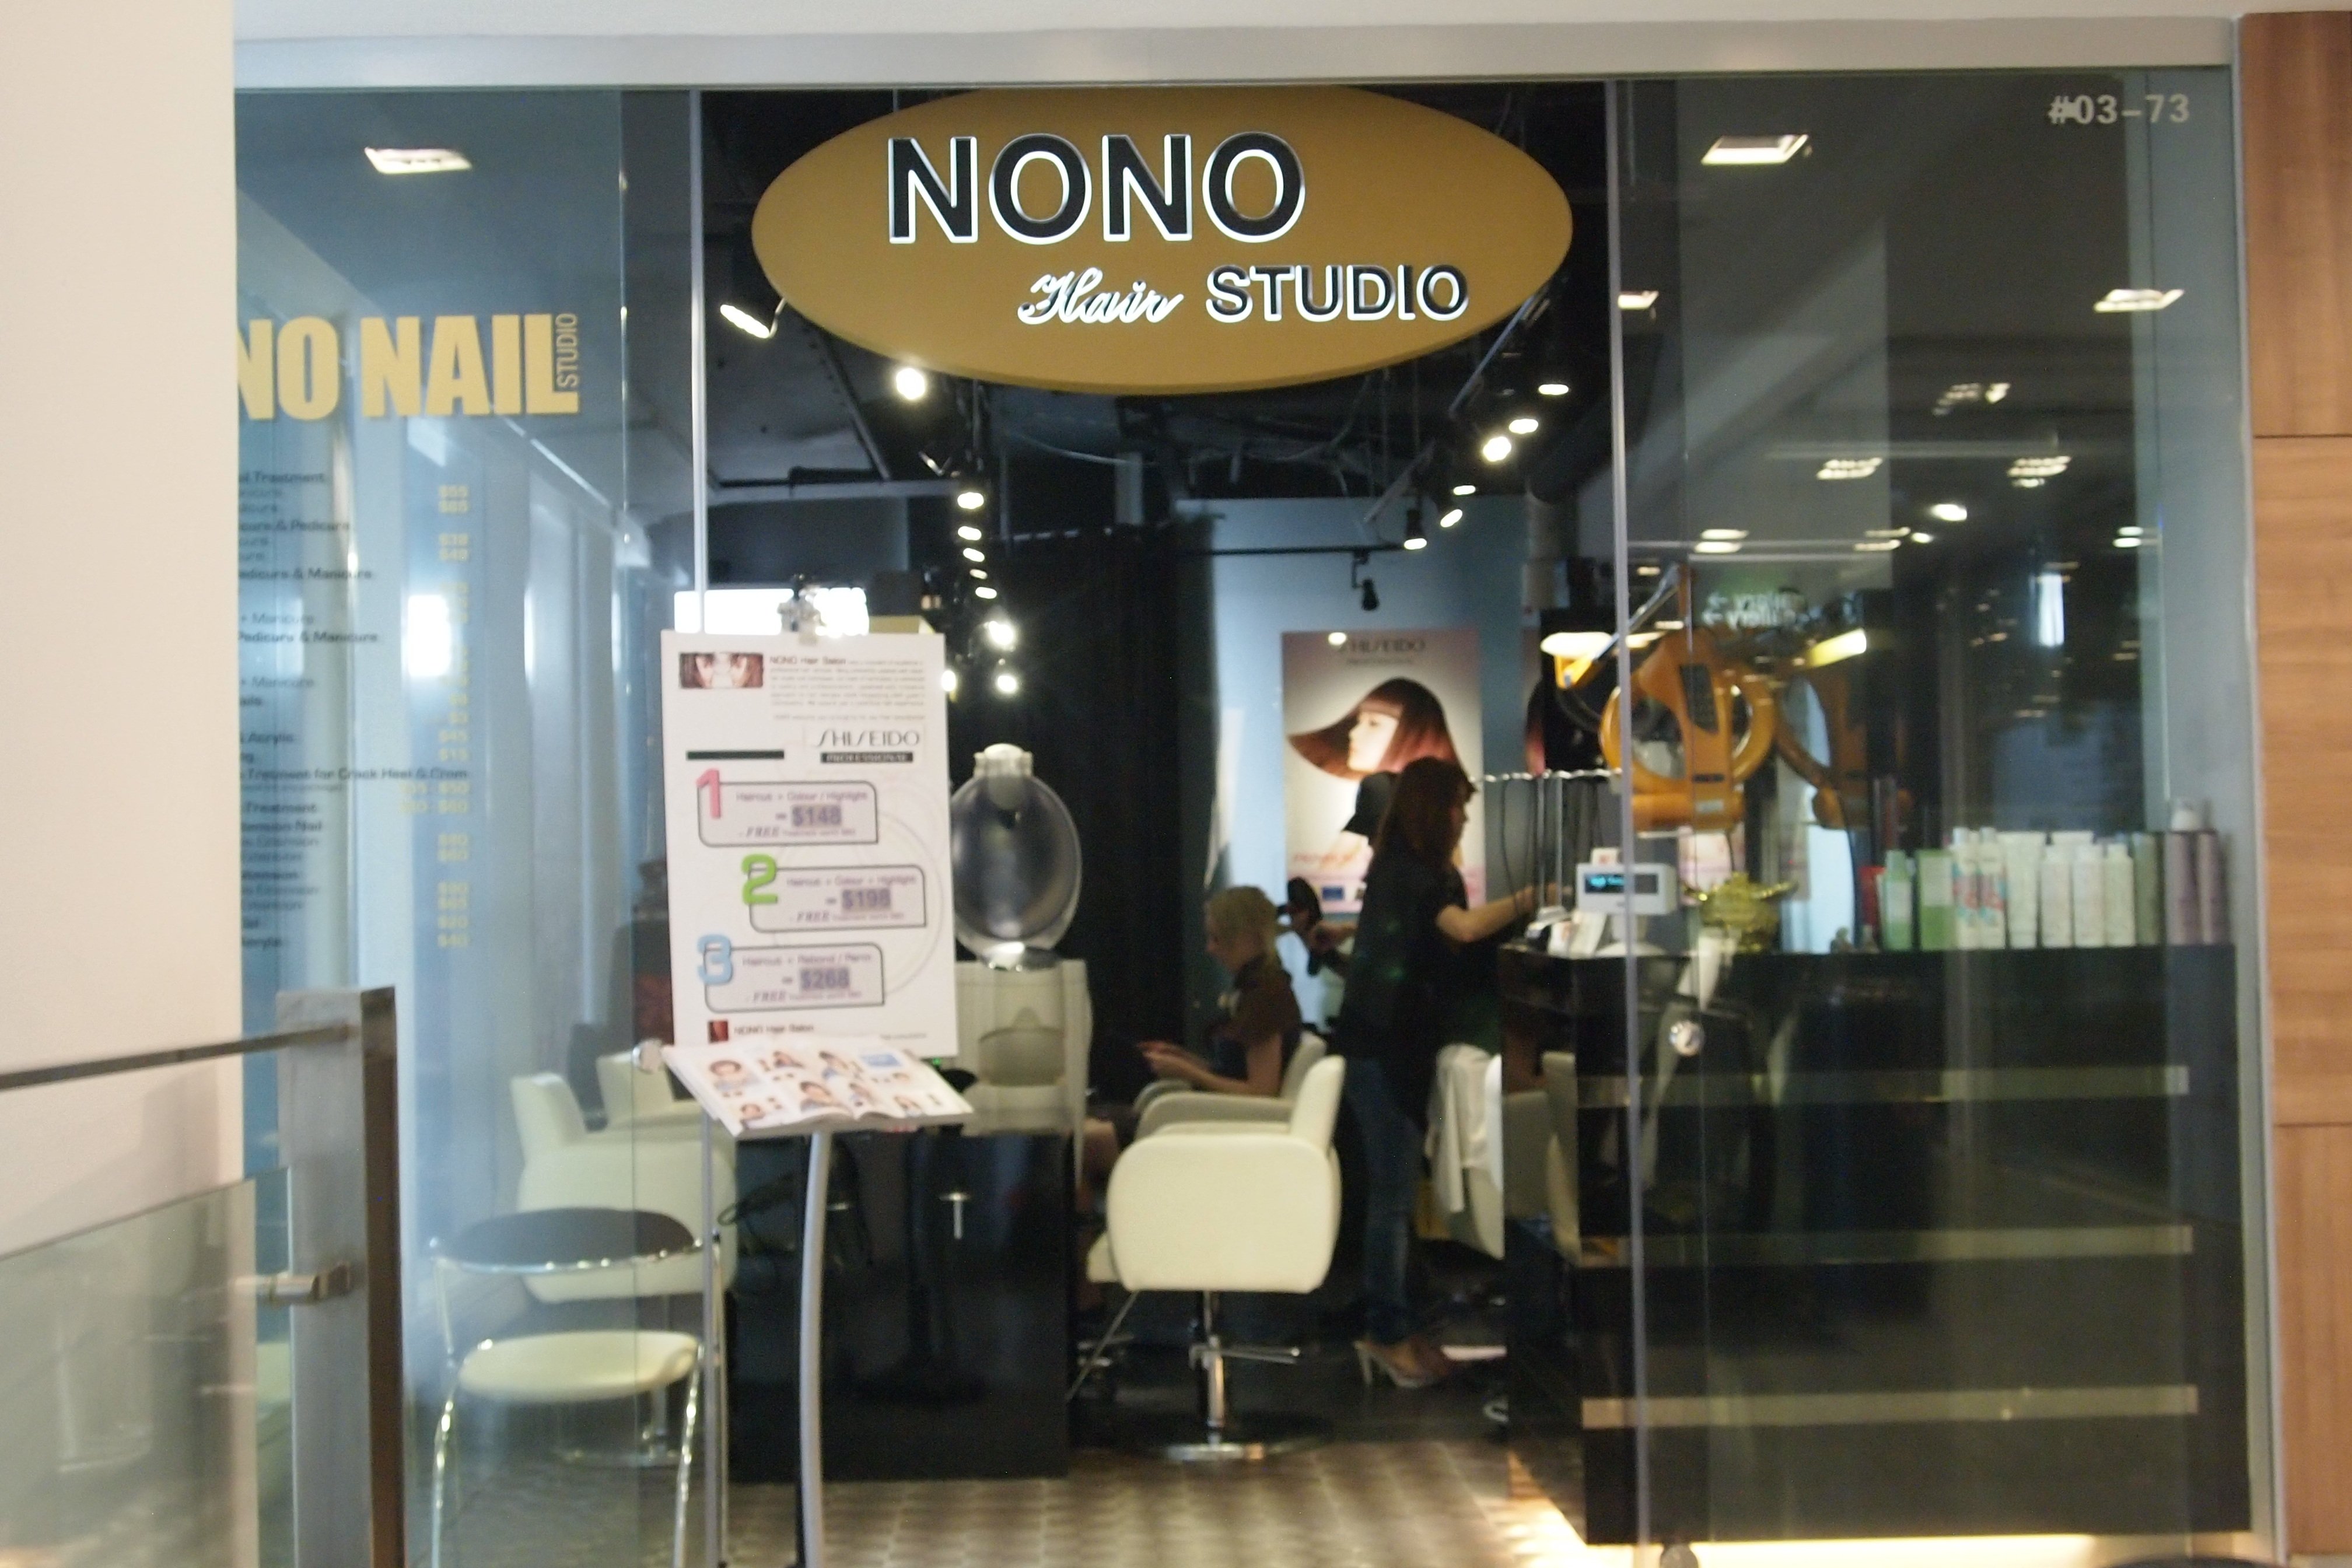 Hair & Nail Salon